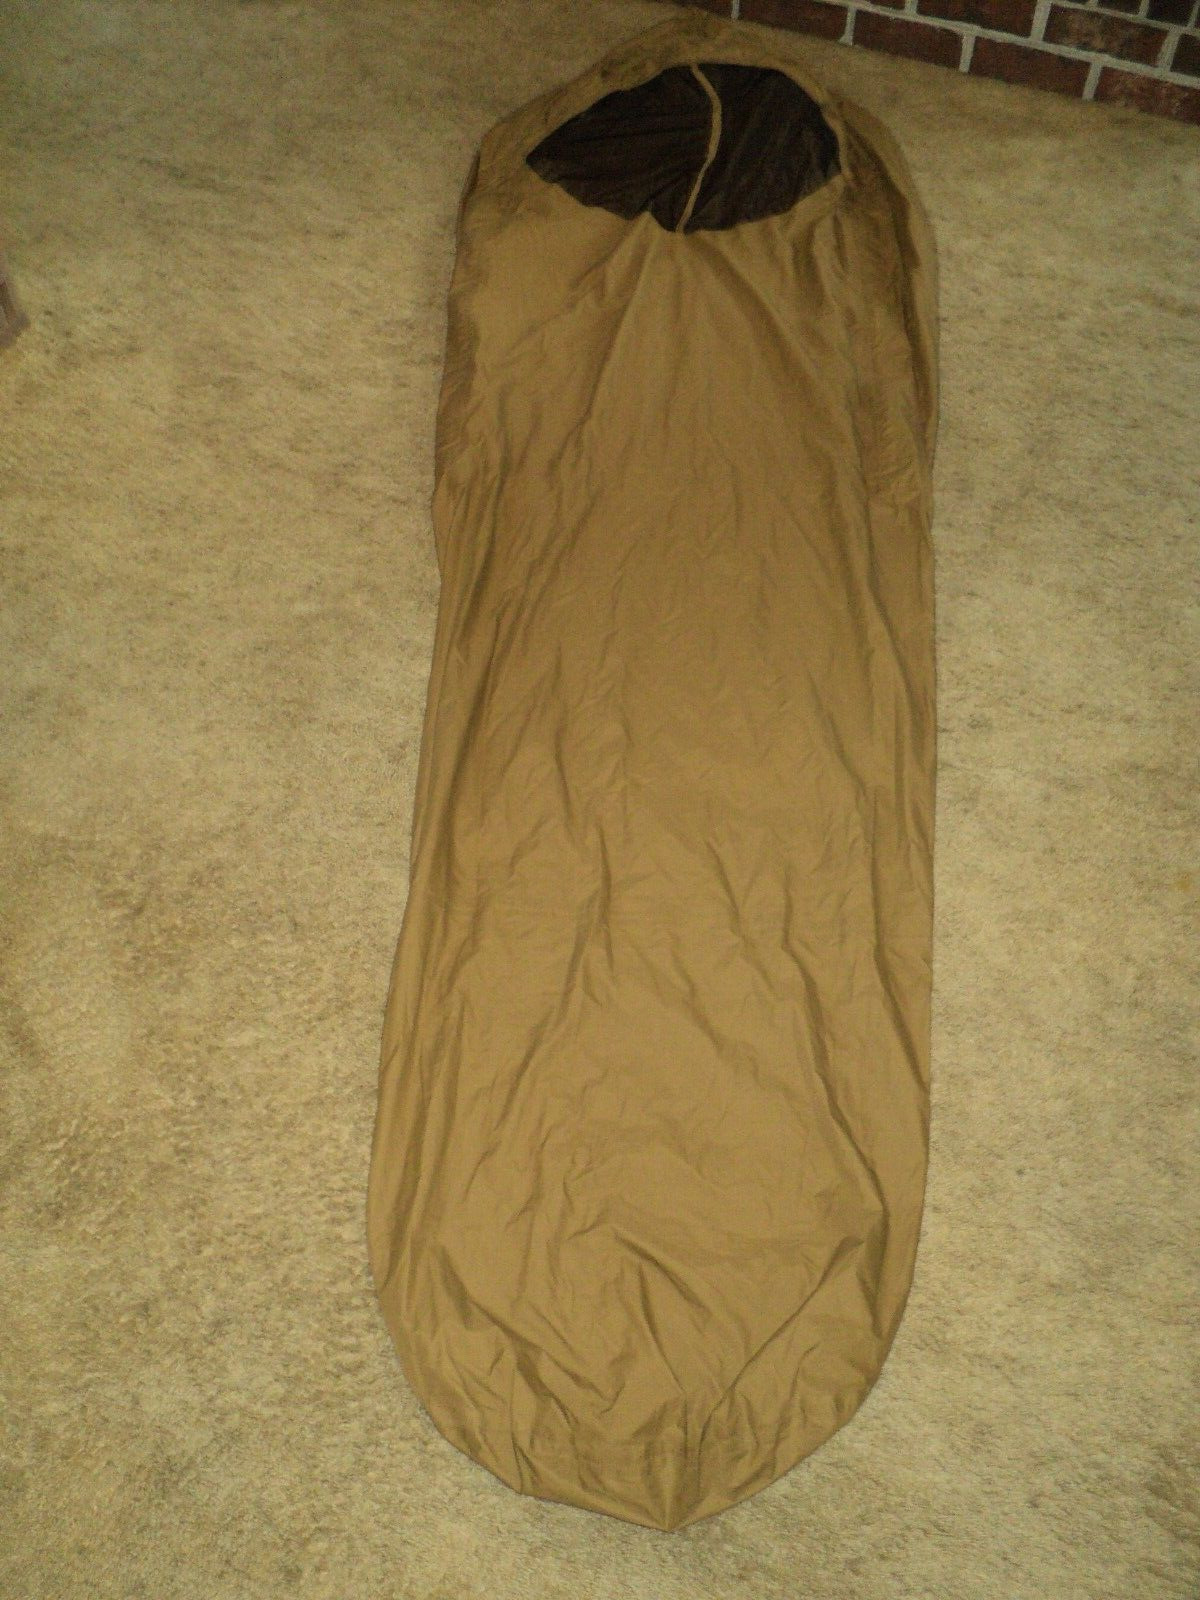 USMC Issue Coyote Improved Bivy Cover 3 Season Sleep System Sleeping Bag Cover O